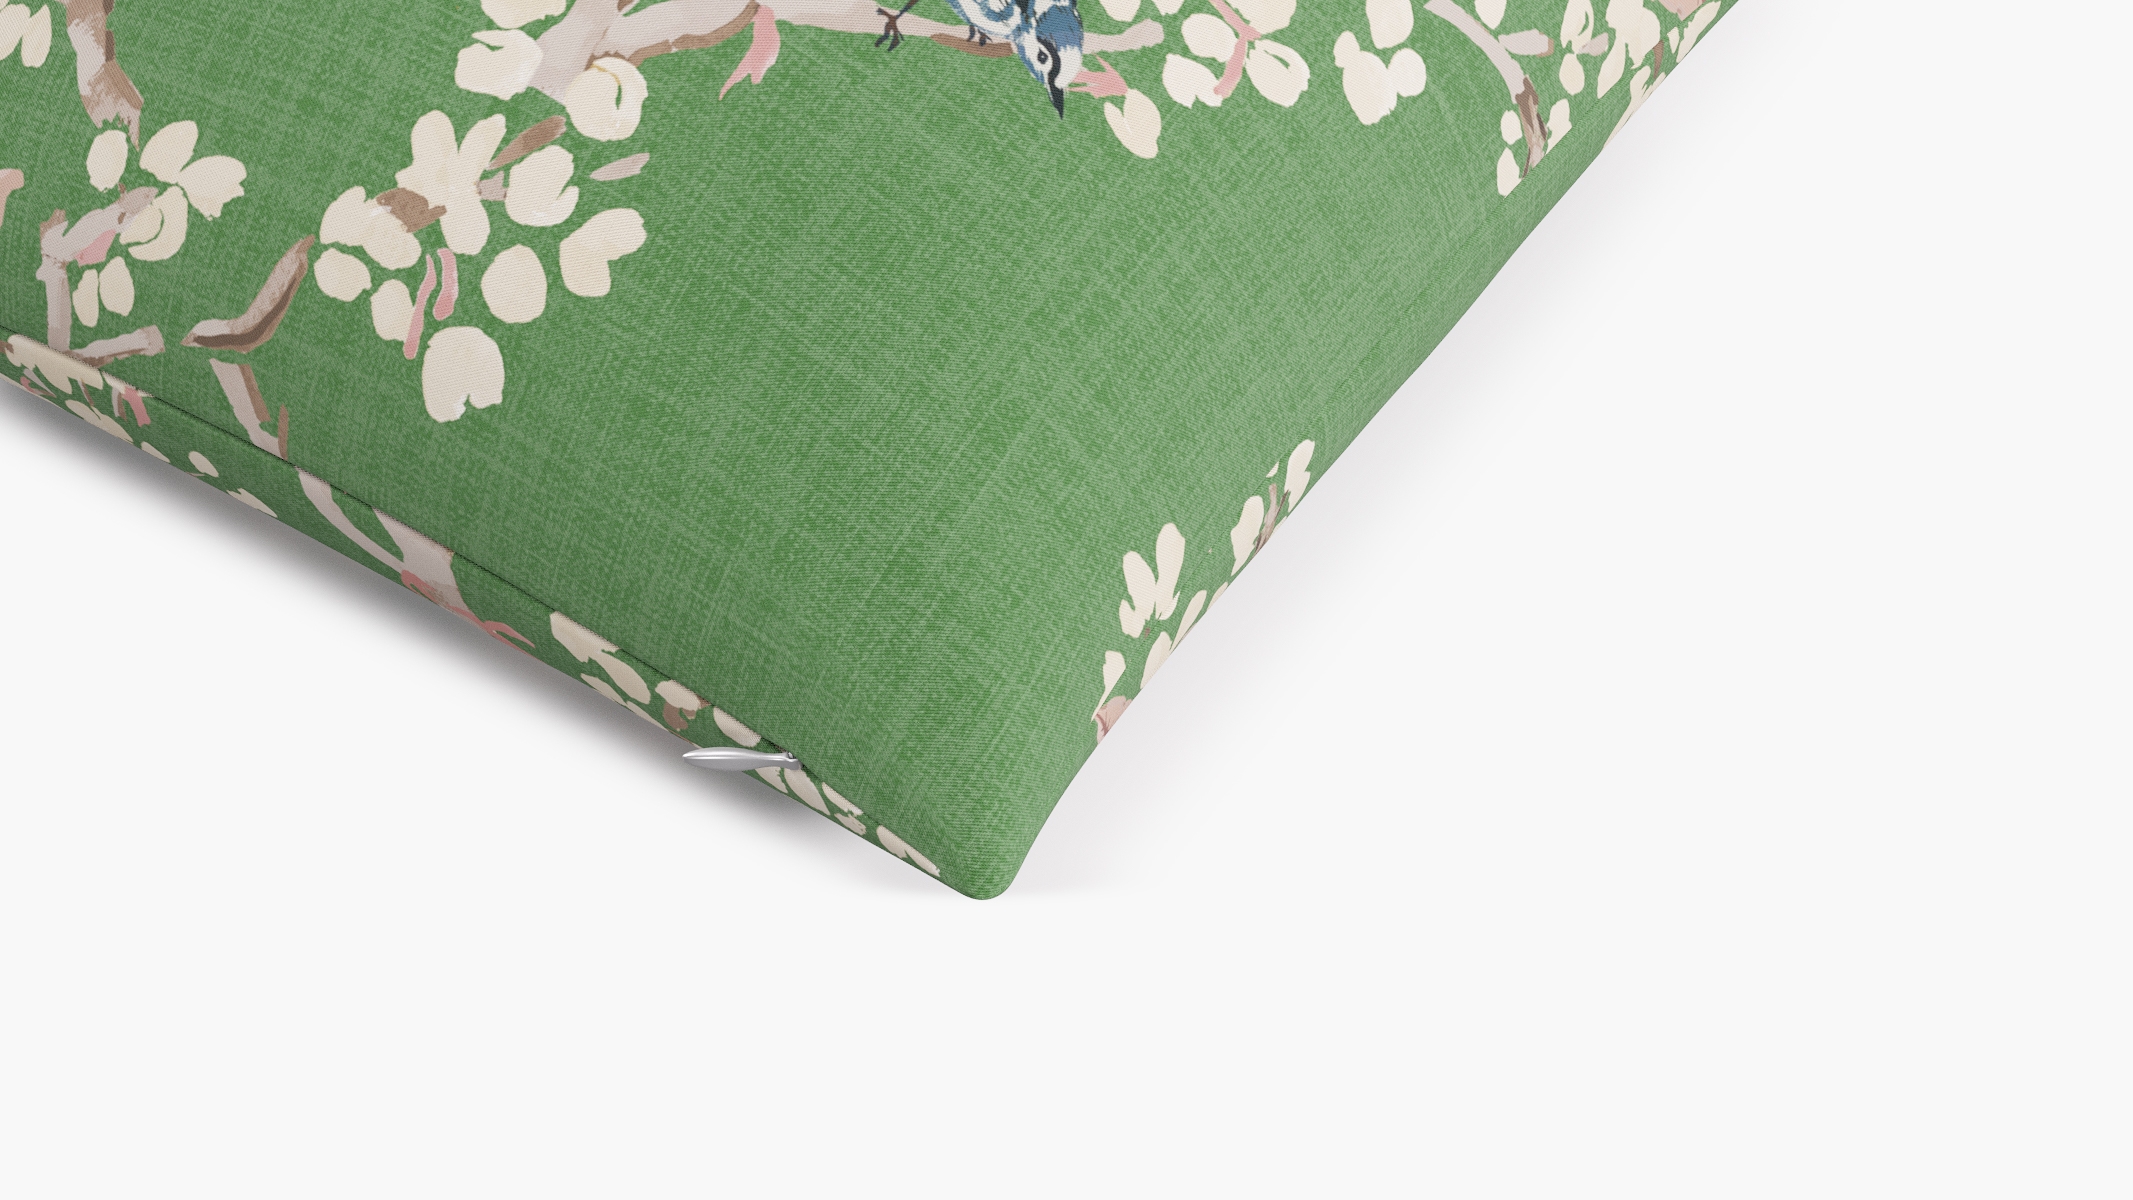 Throw Pillow 18", Jade Cherry Blossom, 18" x 18" - Image 1